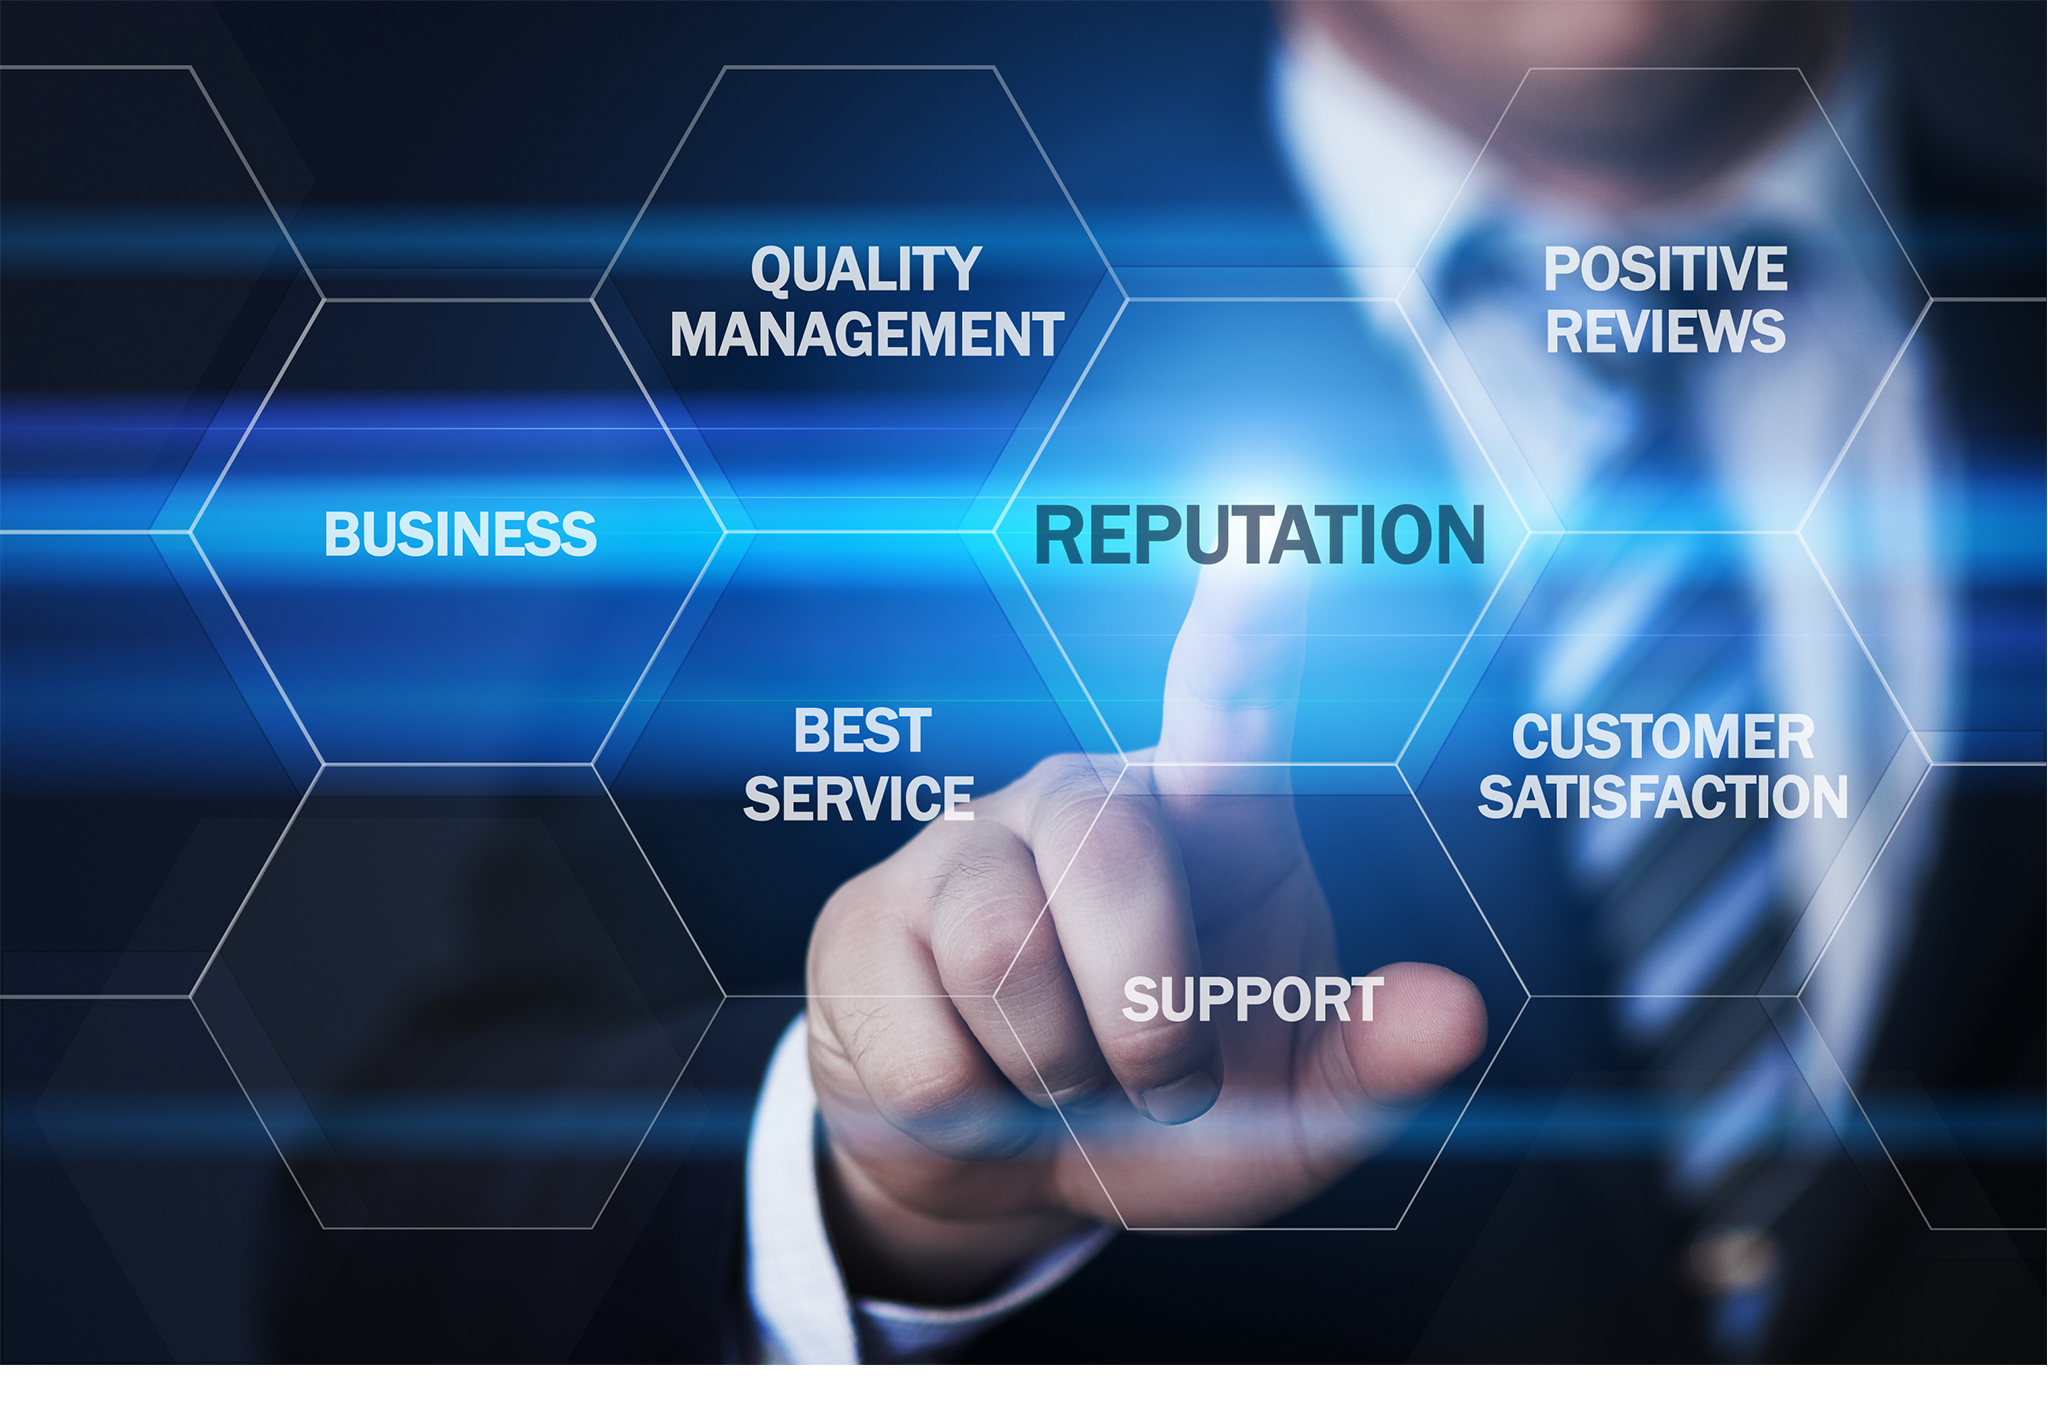 Enhance Your Brand: Delhi Online Reputation Management Services